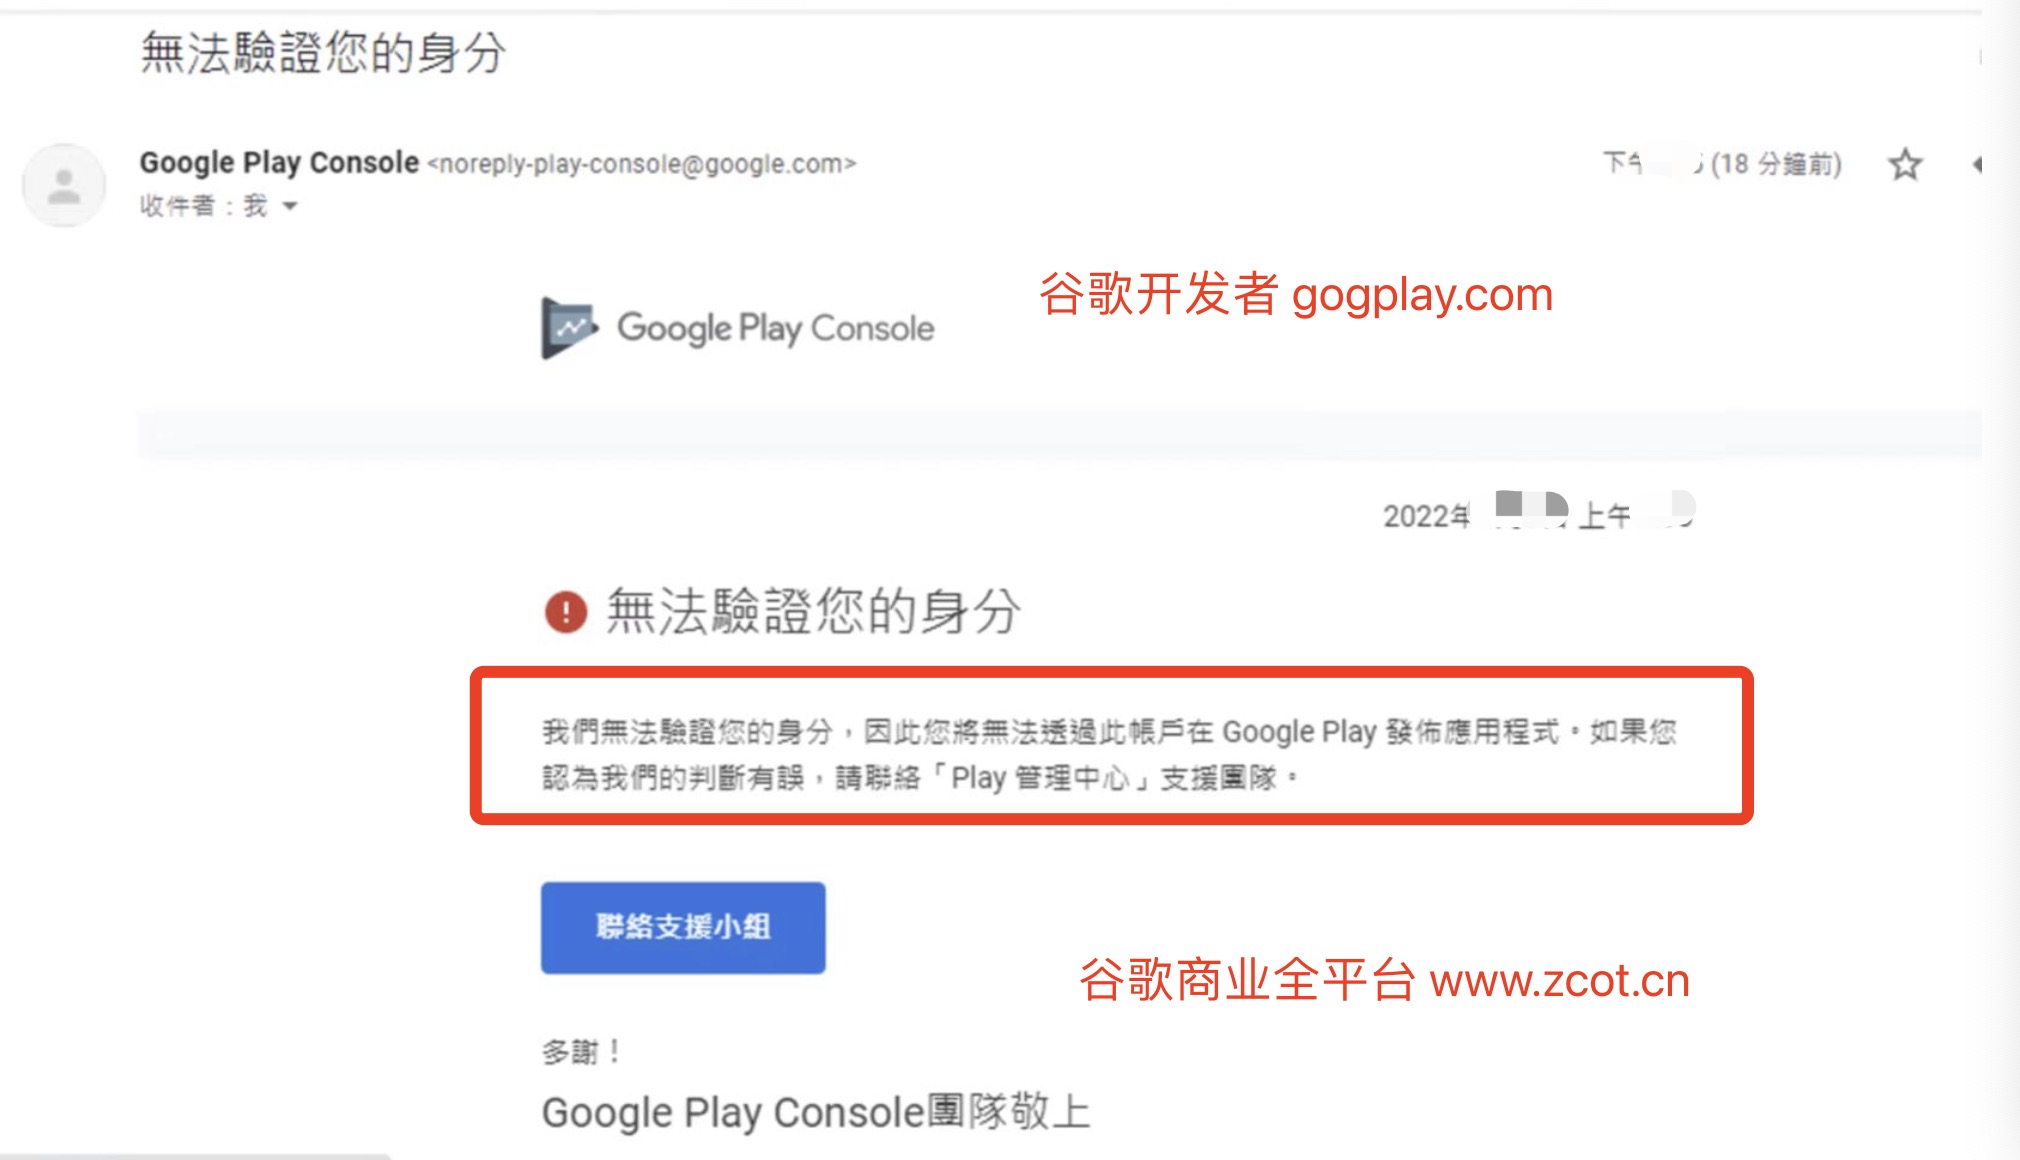 Google play身份驗證失敗:我們無法驗證您的身分，因此您將無法透過此賬戶在google play發布應用程序